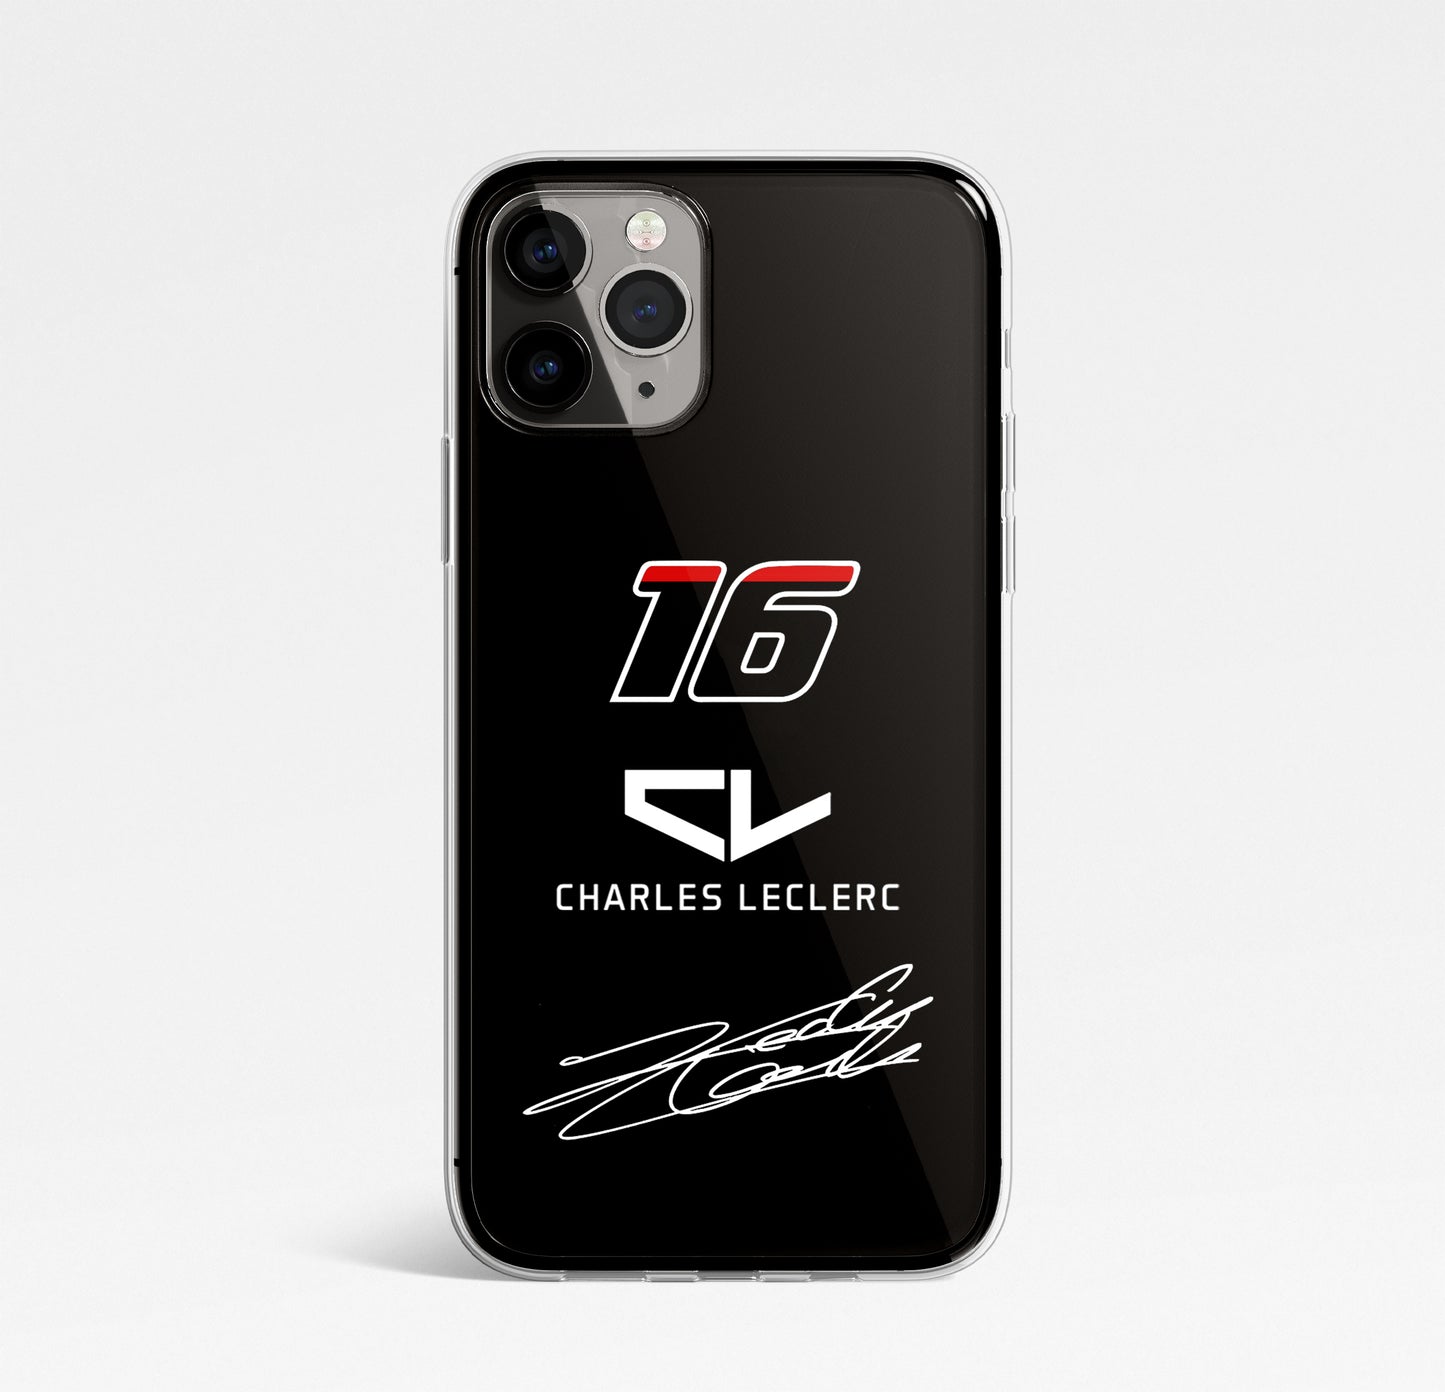 Charles Leclerc 16 F1 phone case